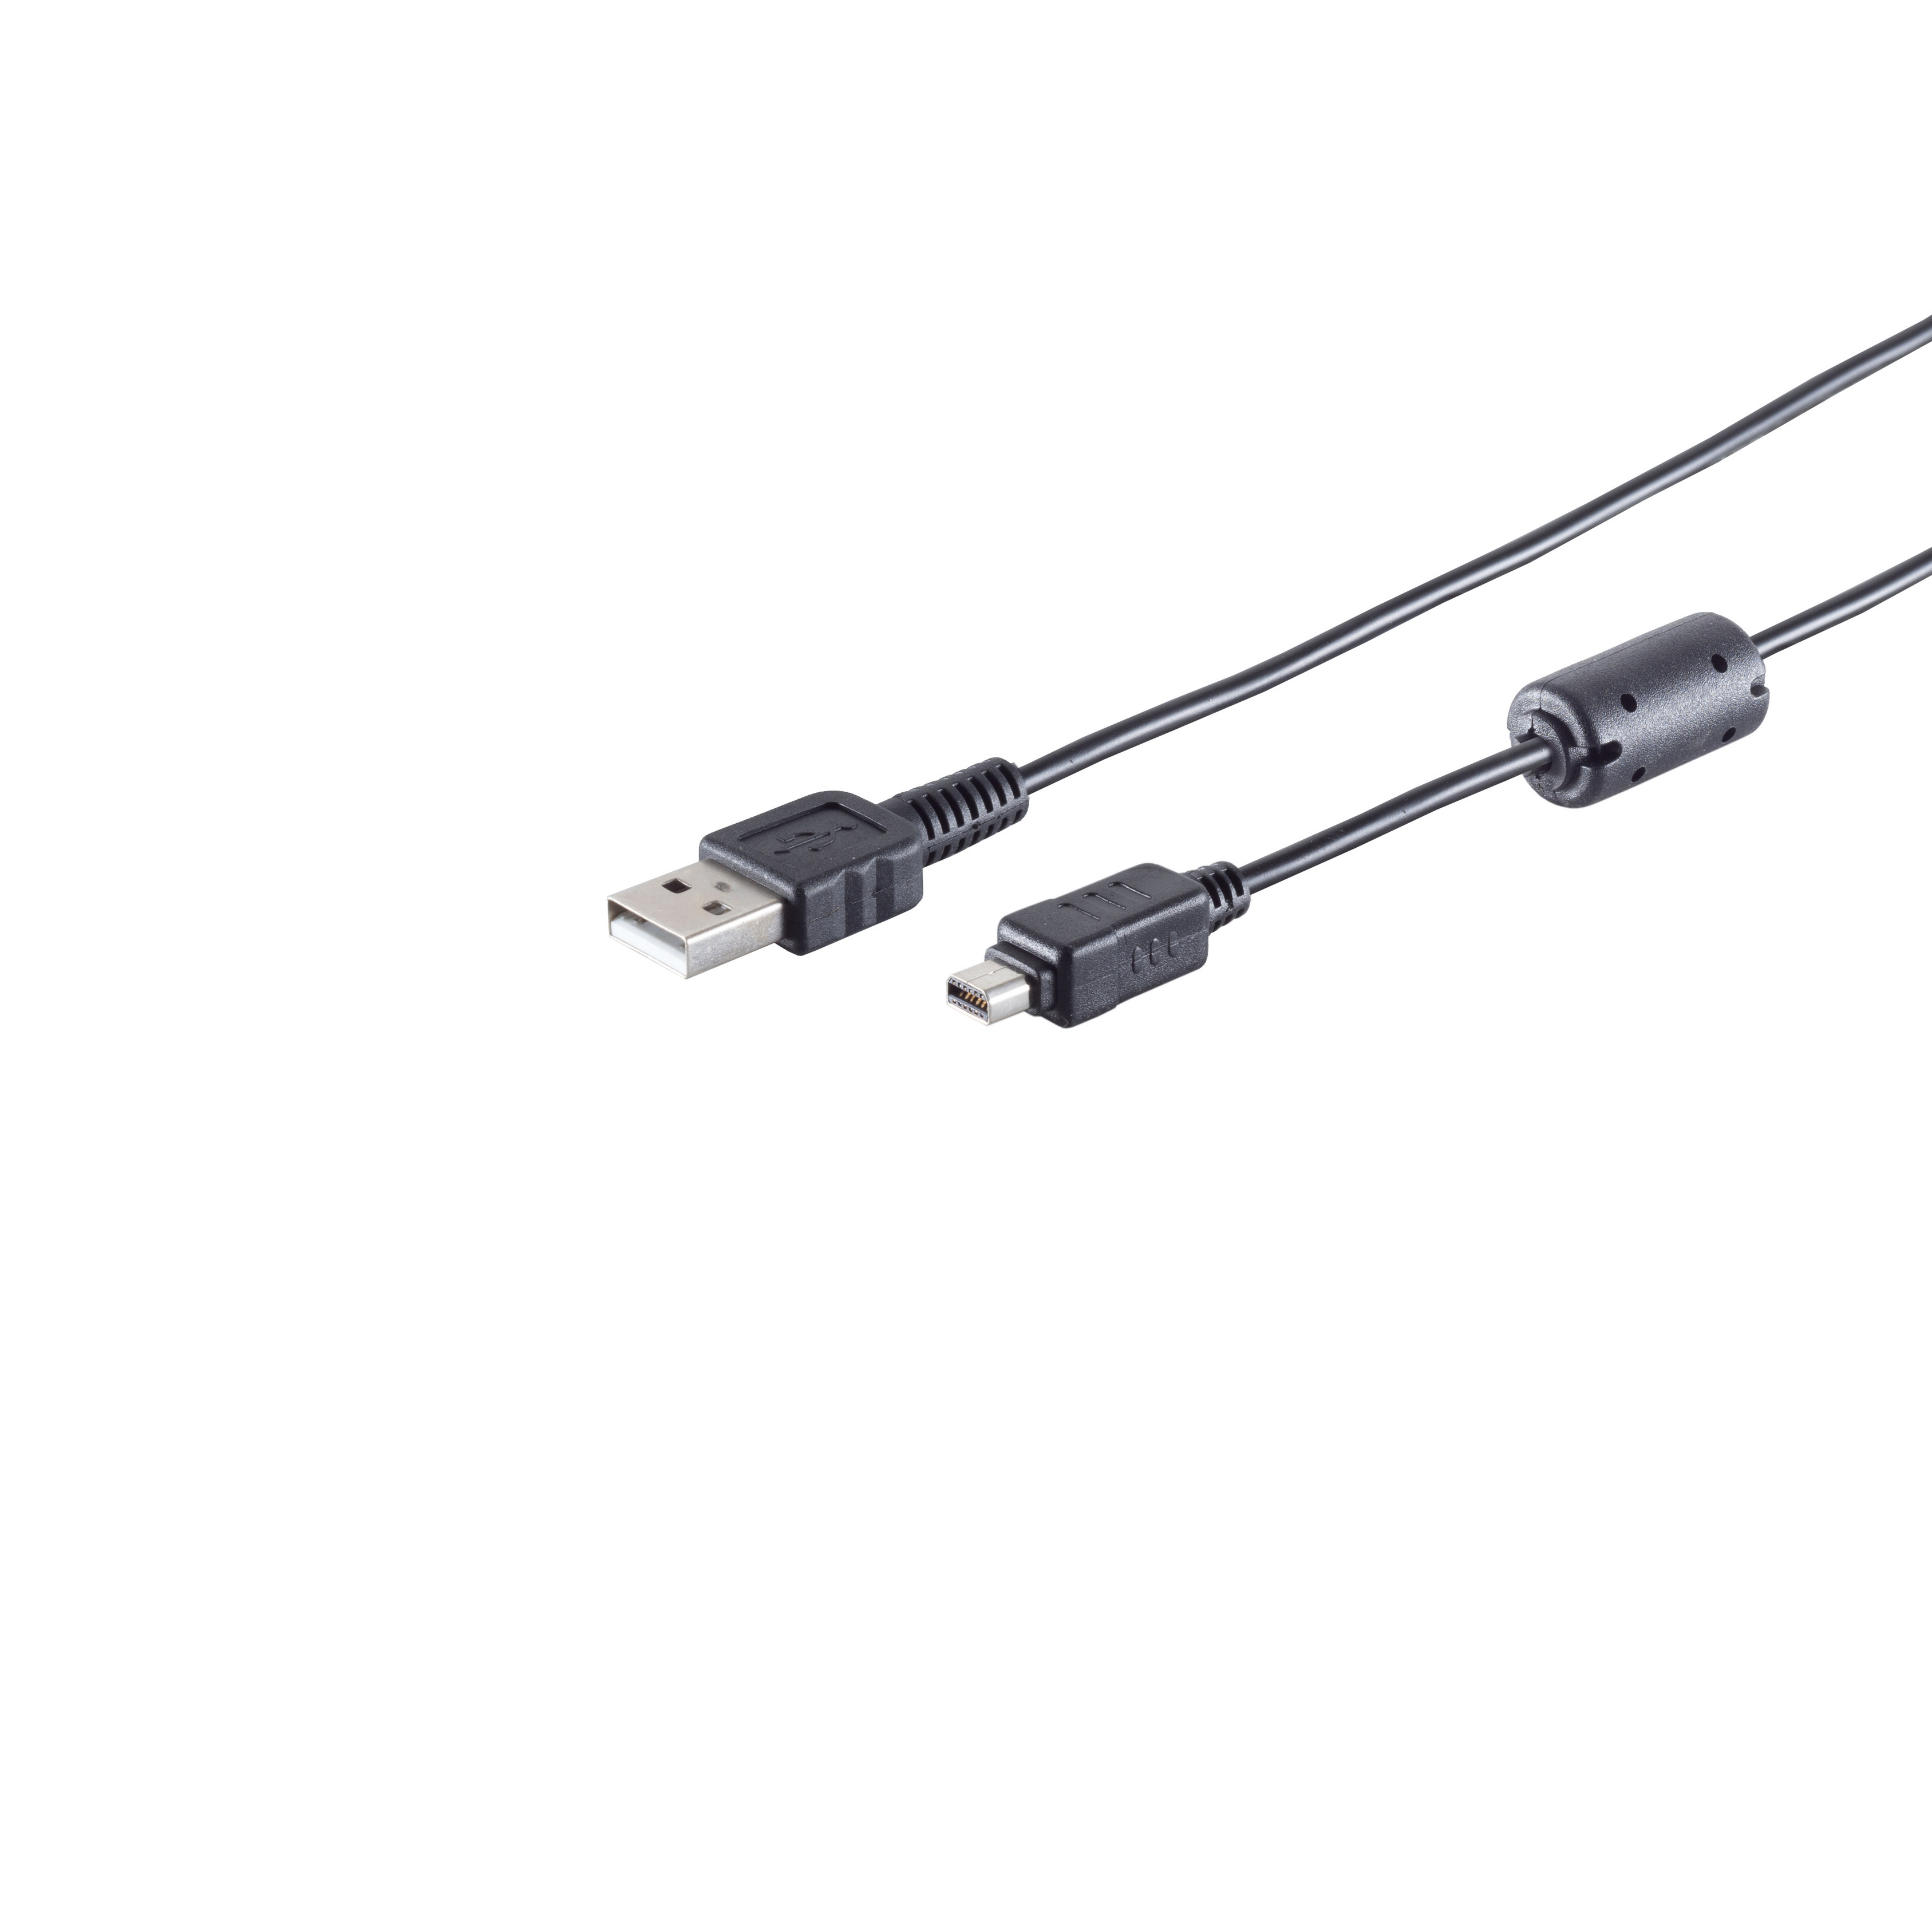 S/CONN MAXIMUM CONNECTIVITY USB Mini 1,5m A 12 2.0 auf Stecker, - pin USB Stecker Kabel